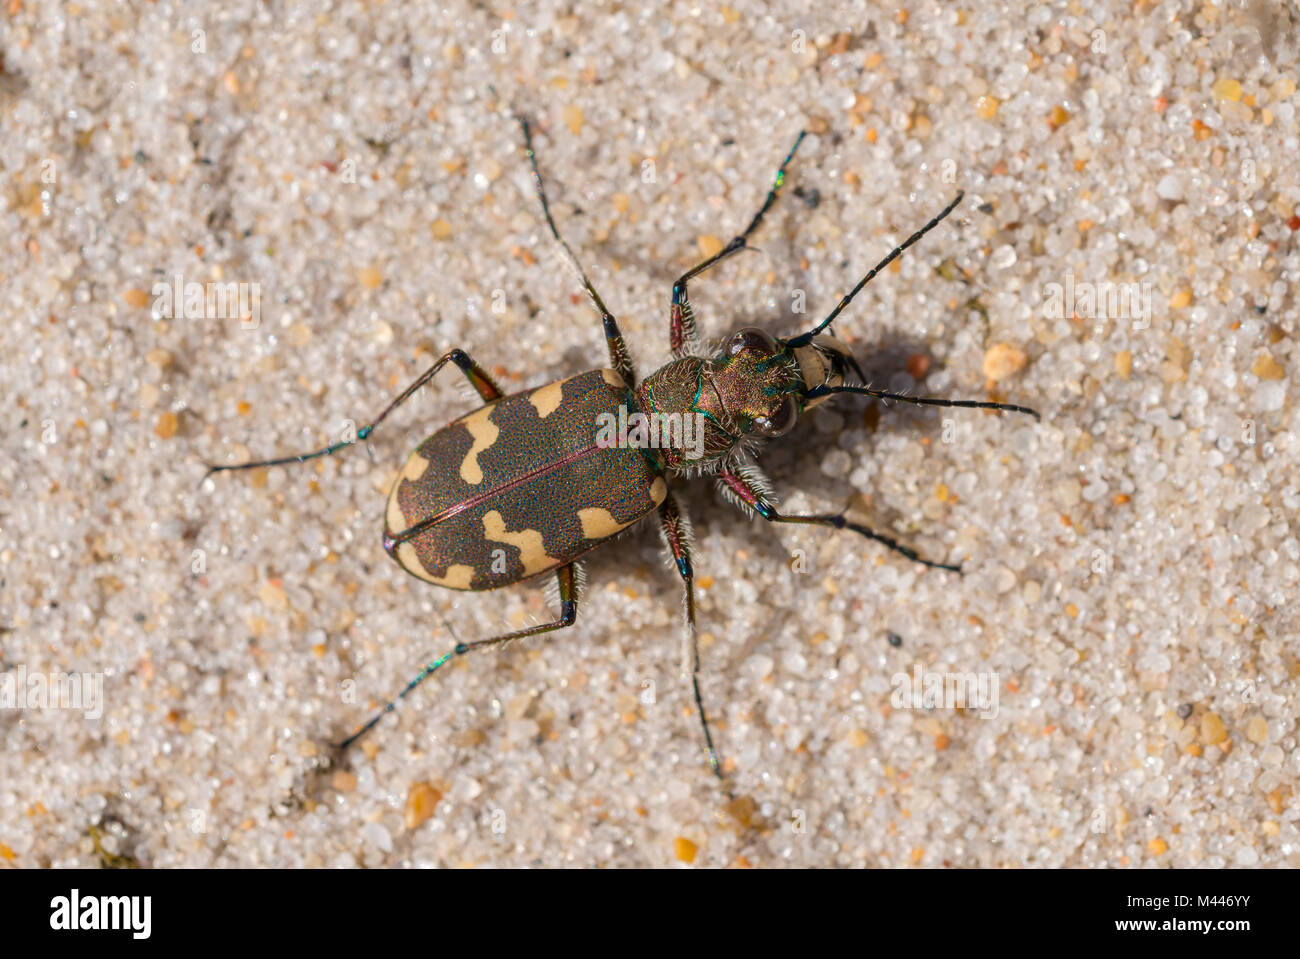 Northern dune tiger beetle (Cicindela hybrida) in sand,Henne Strand,Region Syddanmark,Denmark Stock Photo